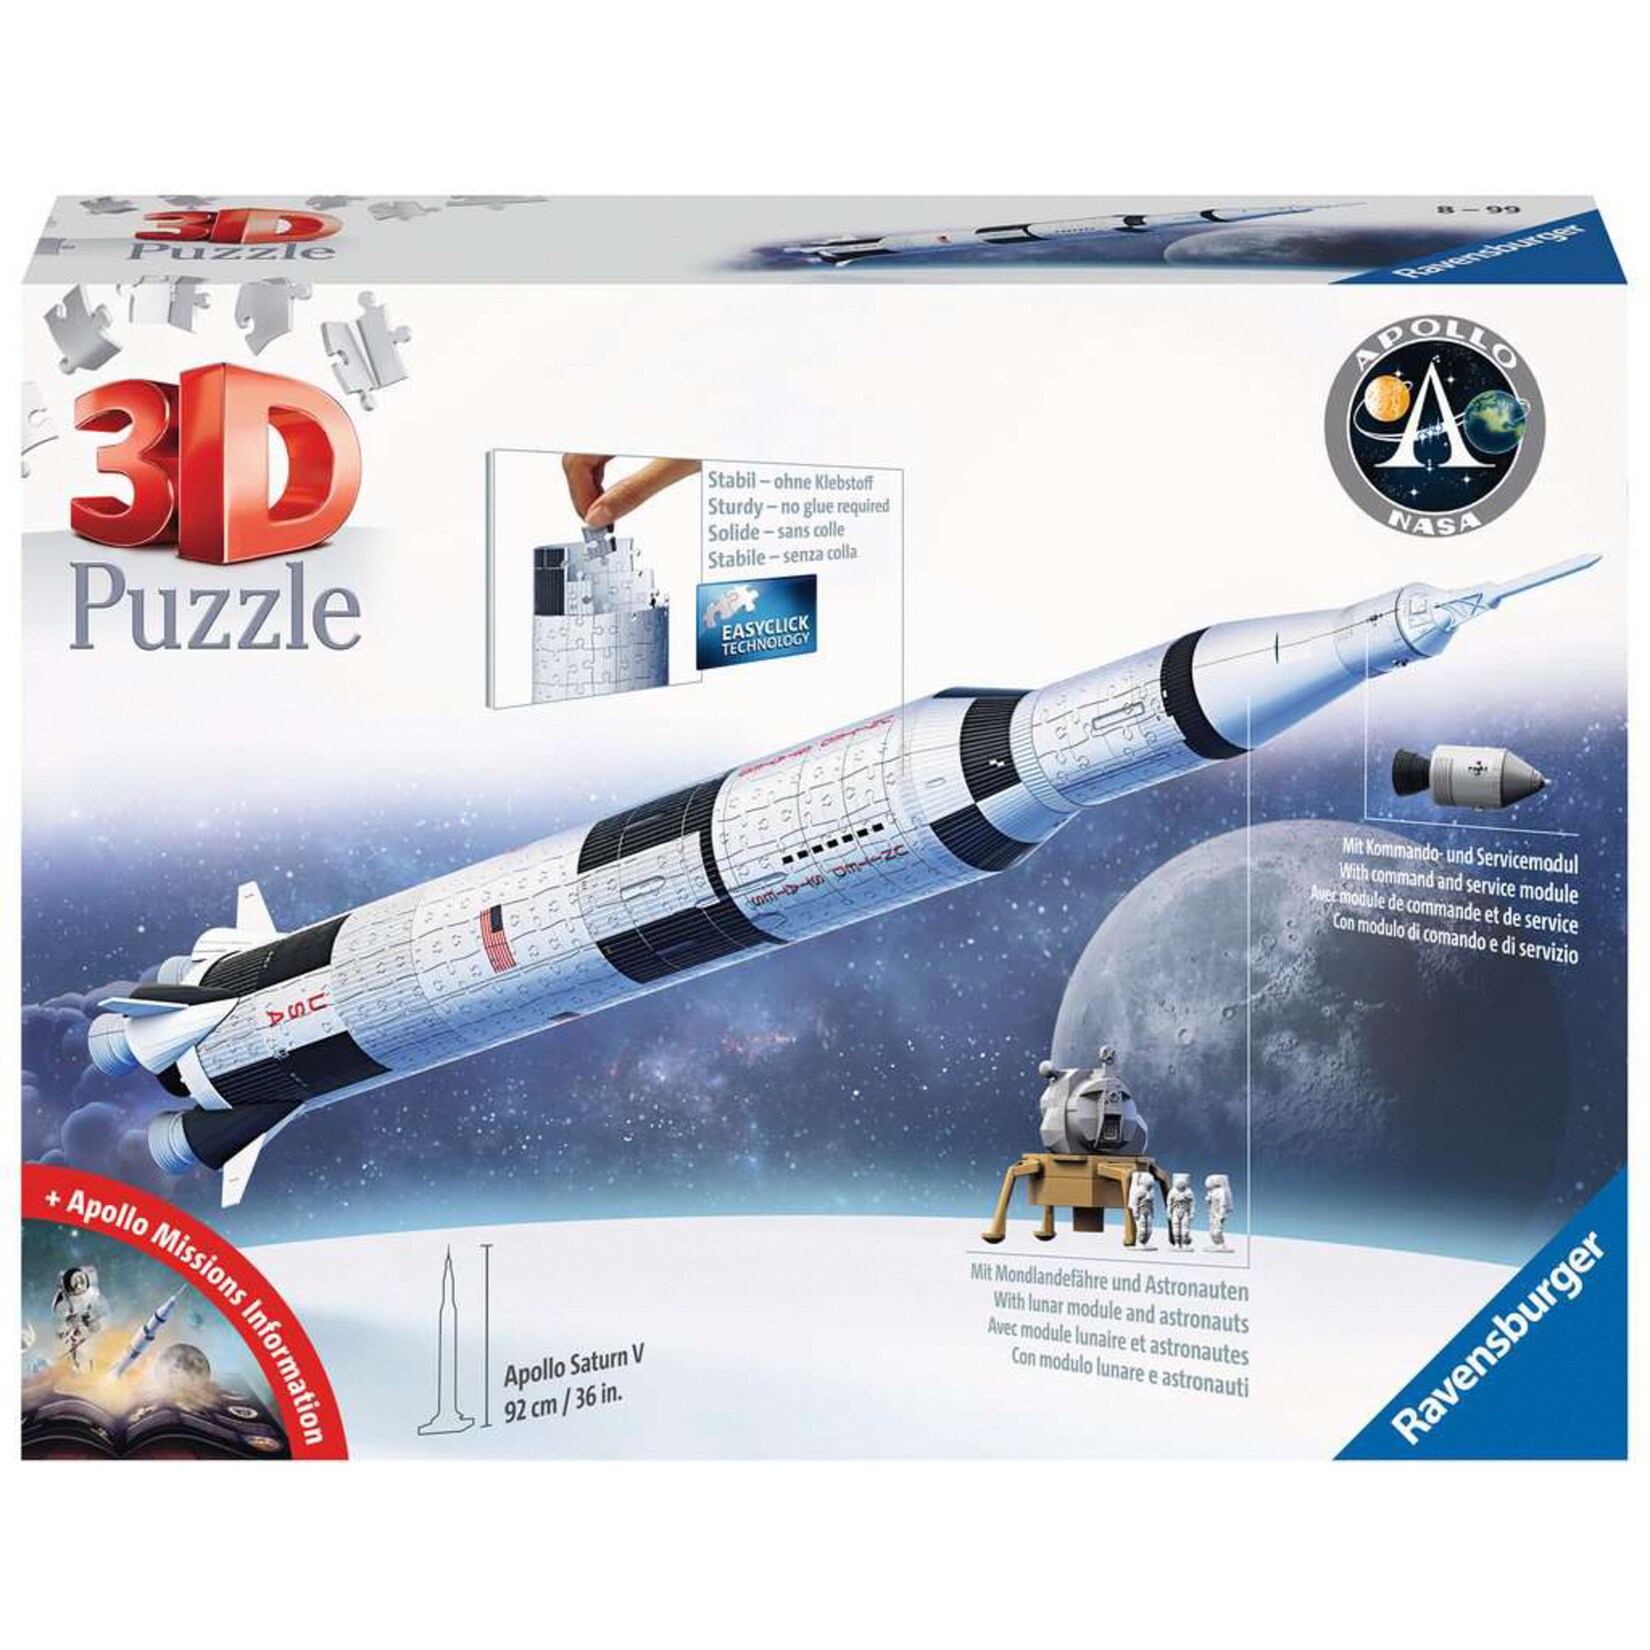 Ravensburger Puzzle 3D-Puzzle Apollo Saturn V Rocket